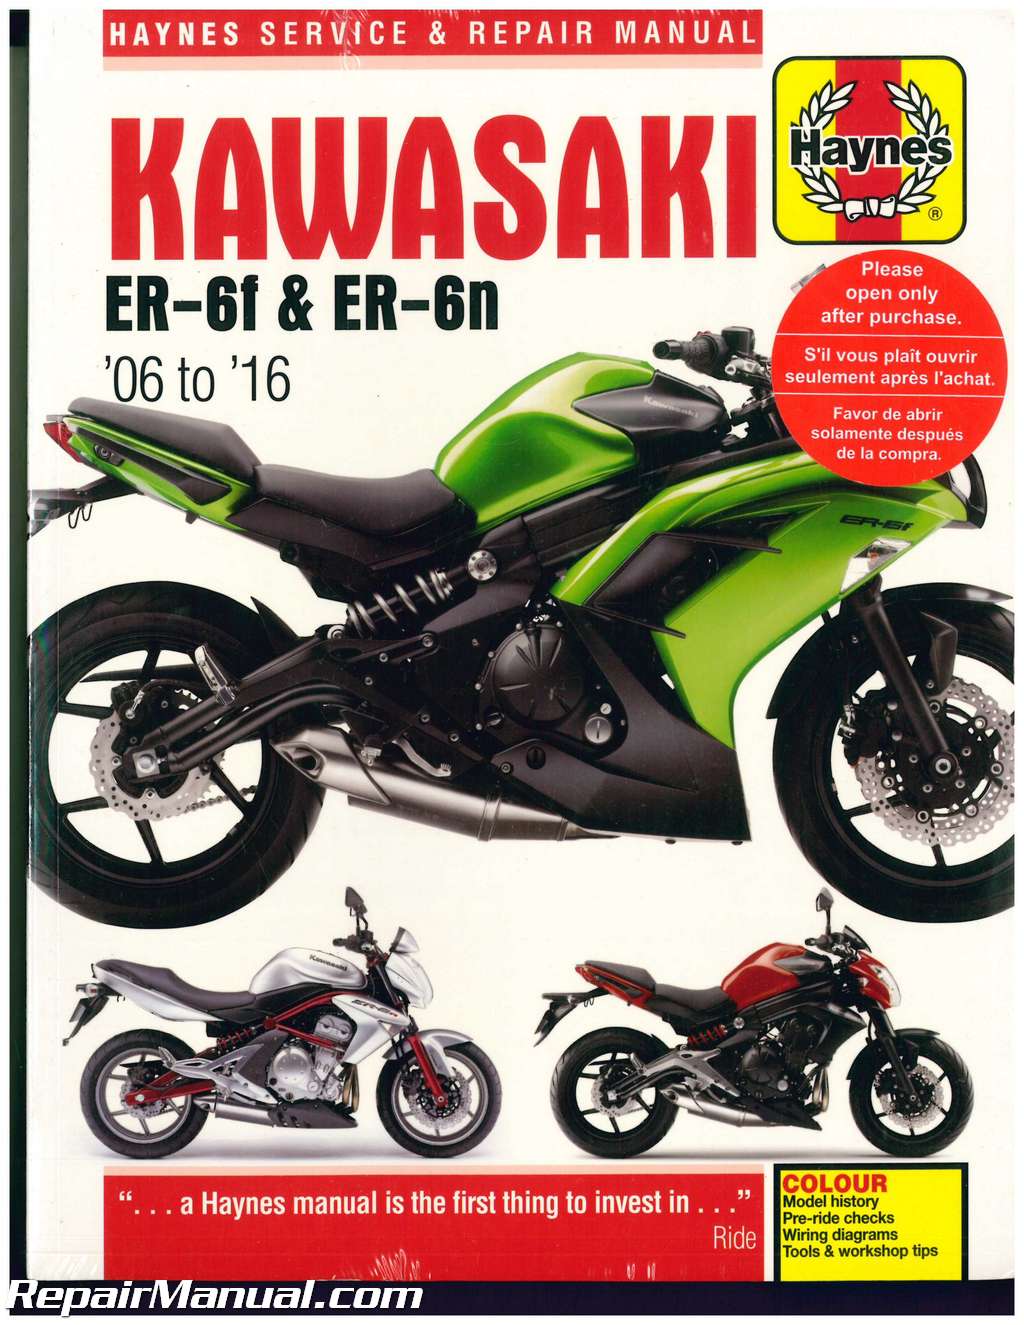 Red Drive Chain And Sprocket Kit for Kawasaki Ninja 650 EX650 Abs 2012-2017